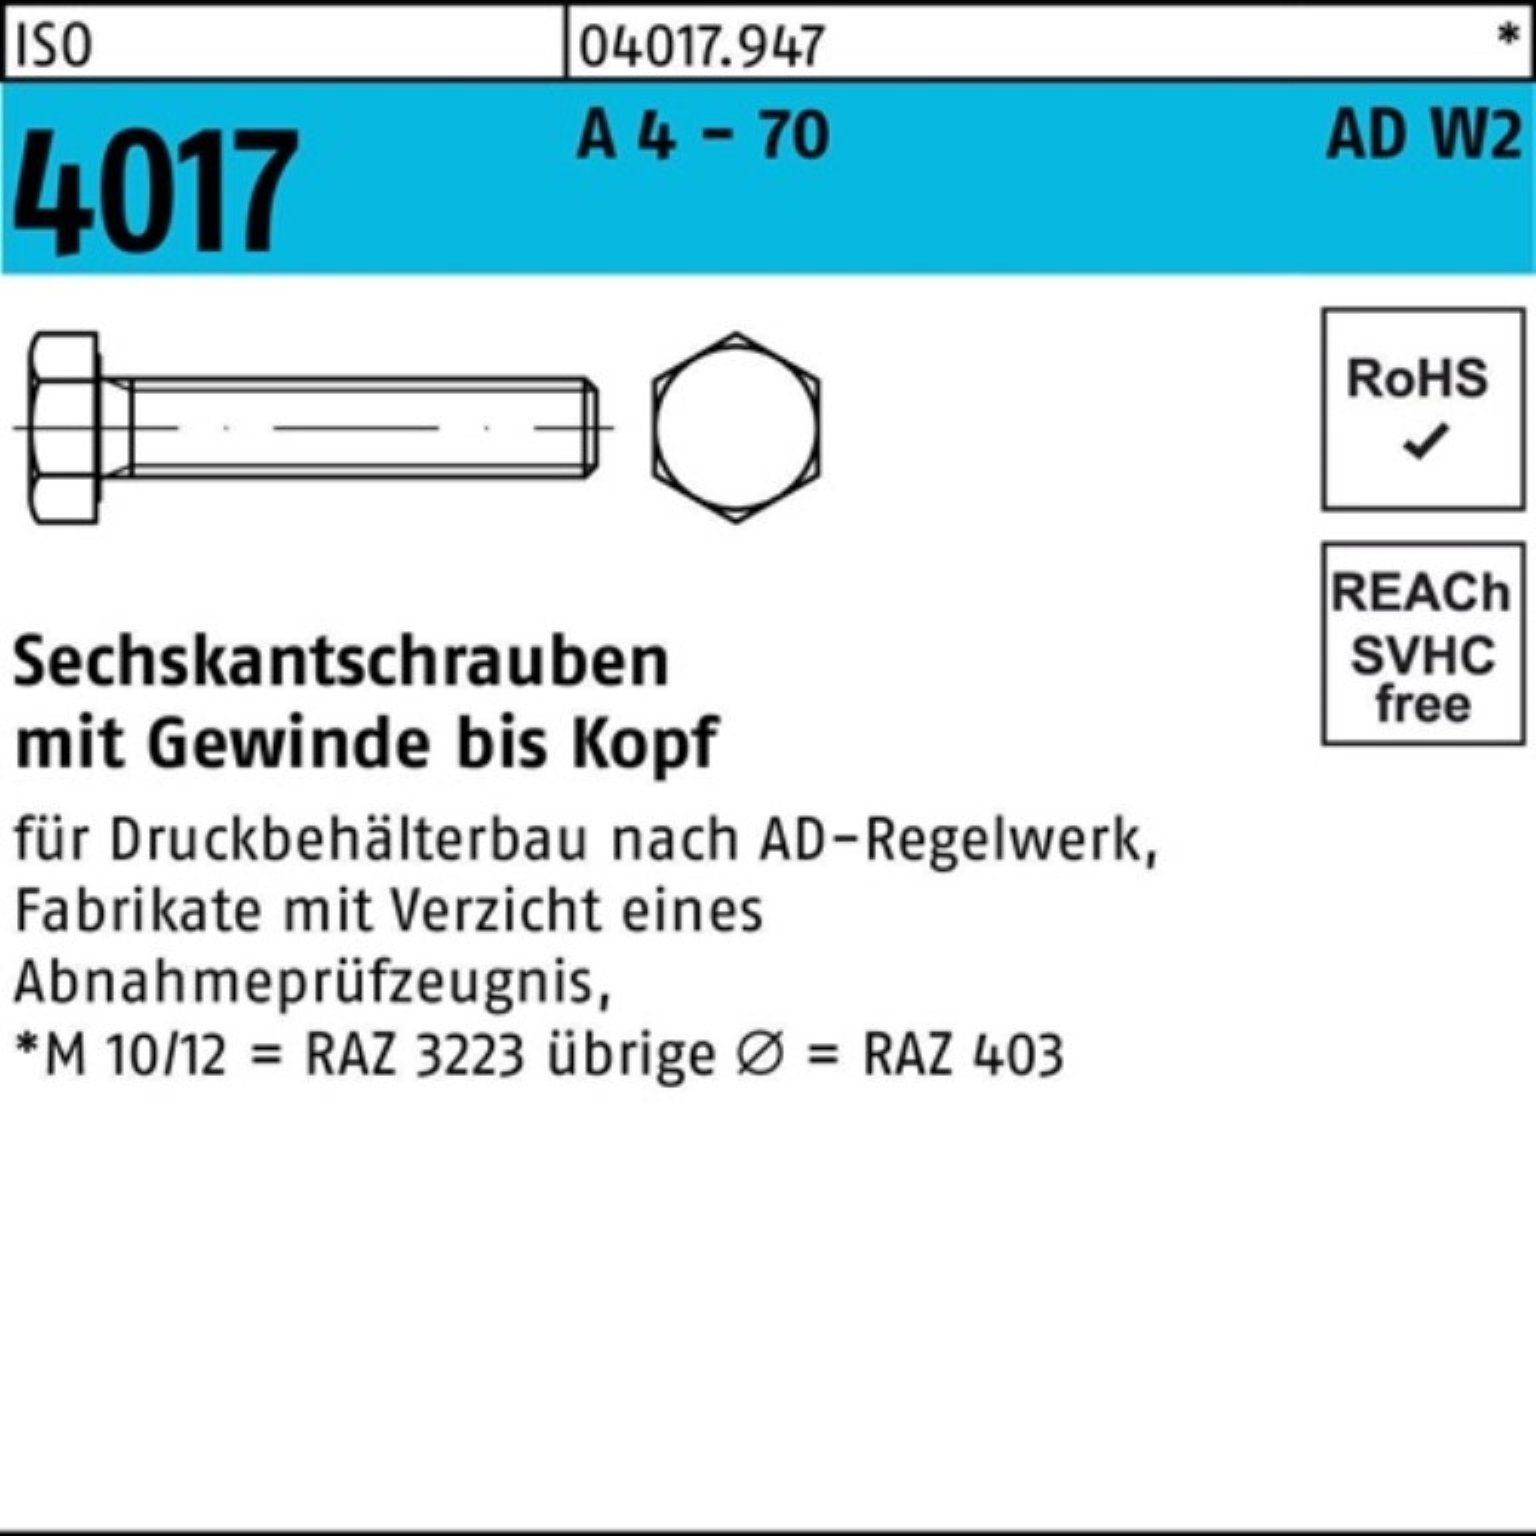 Bufab Sechskantschraube 100er Pack Sechskantschraube ISO 4017 VG M20x 60 A 4 - 70 AD-W2 25 St | Schrauben